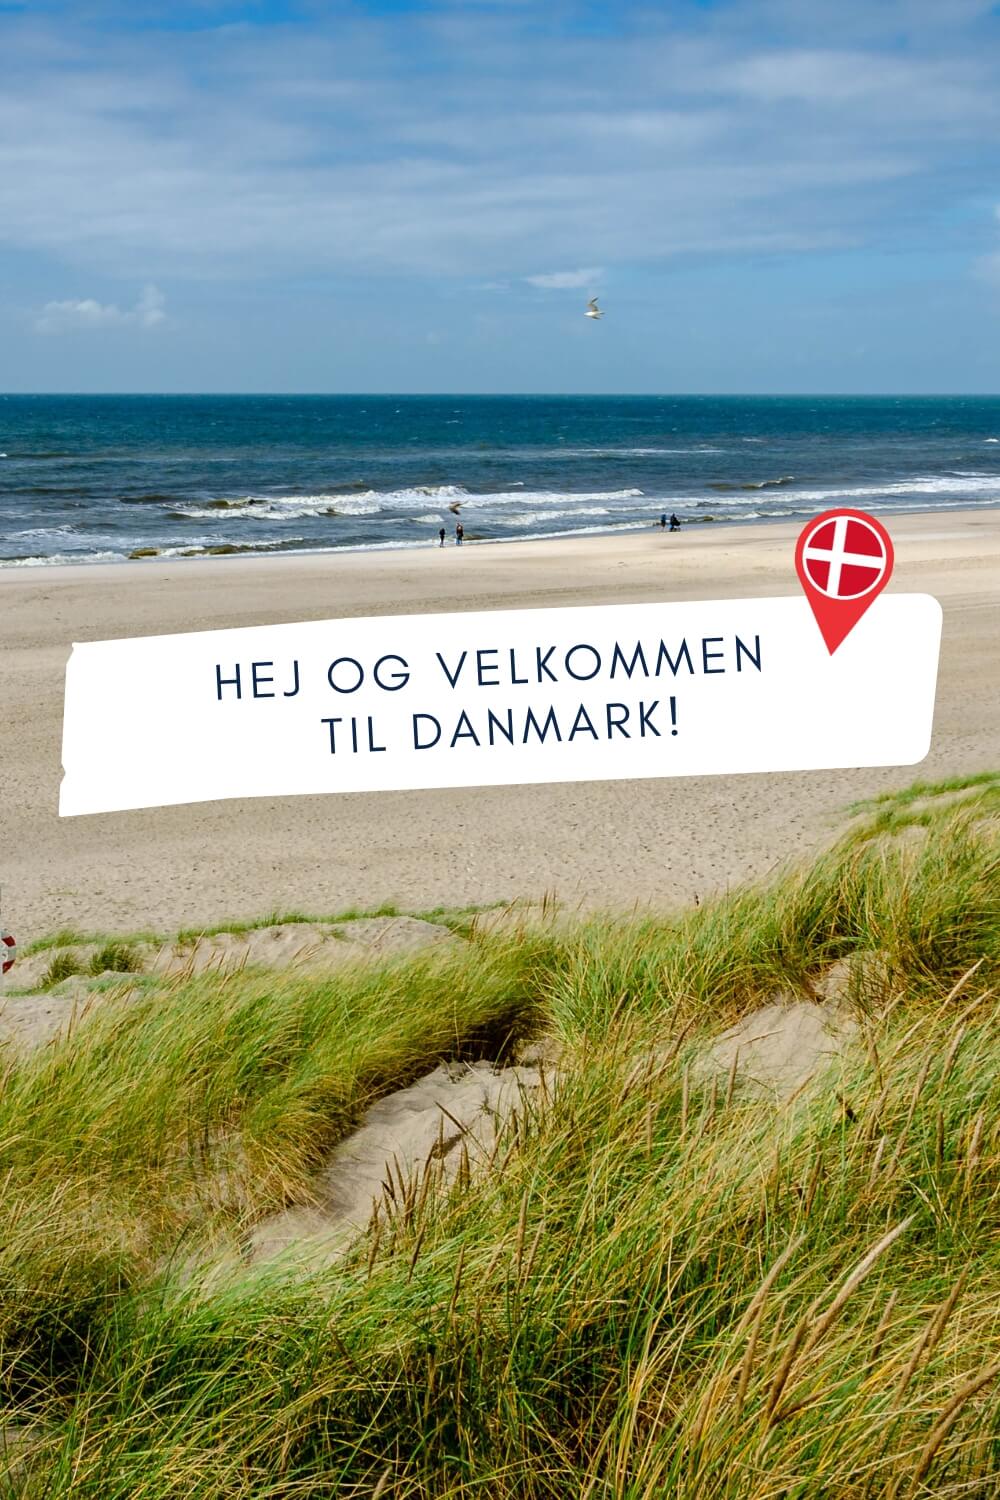 Arriving in Denmark: Beach